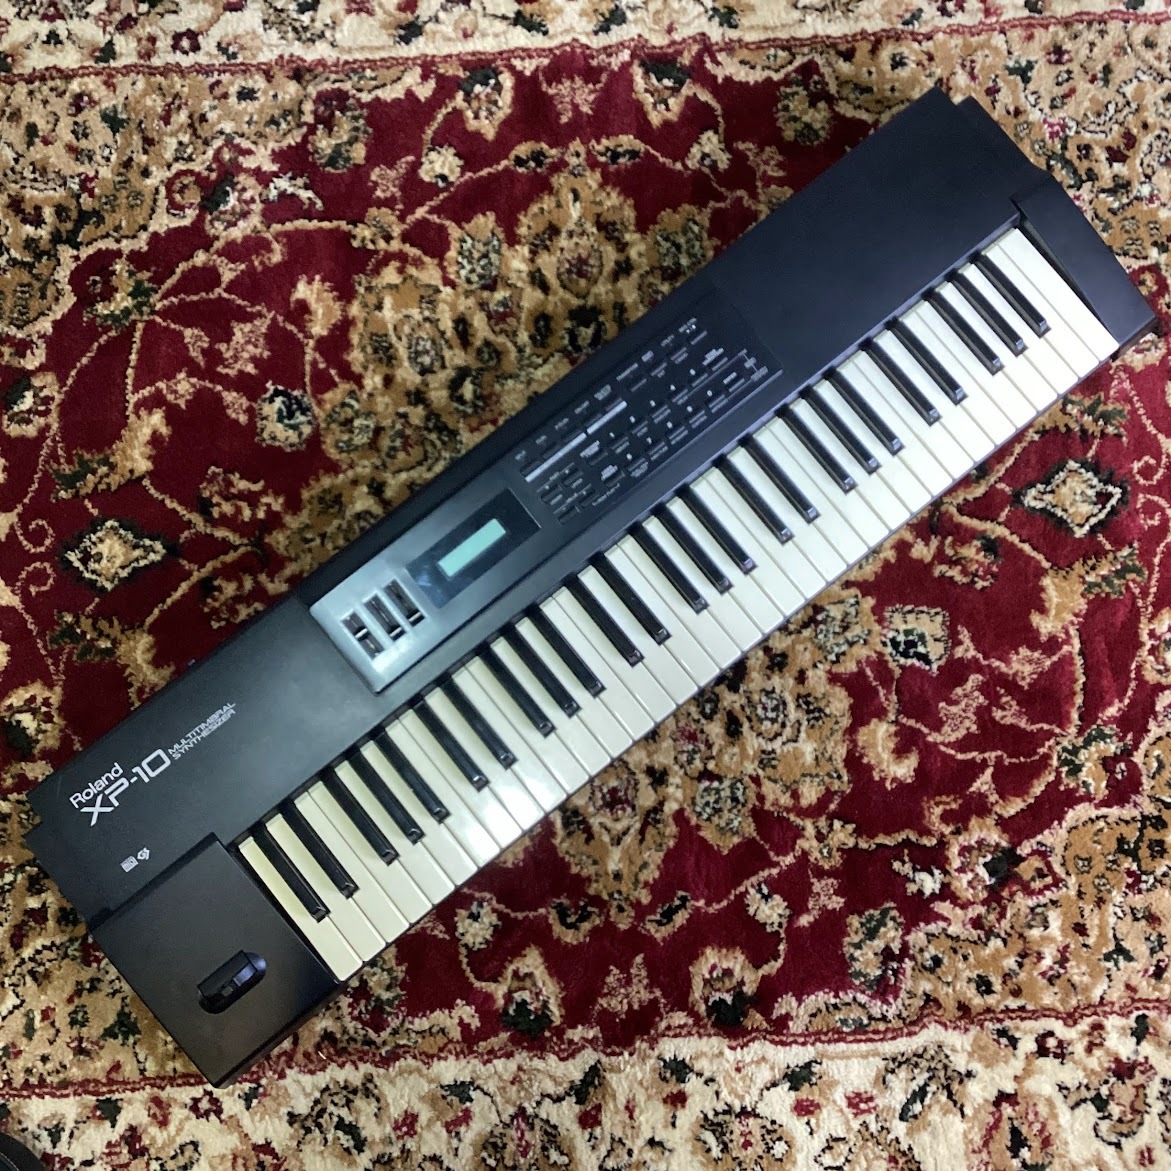 Roland シンセサイザー XP-10 - 鍵盤楽器